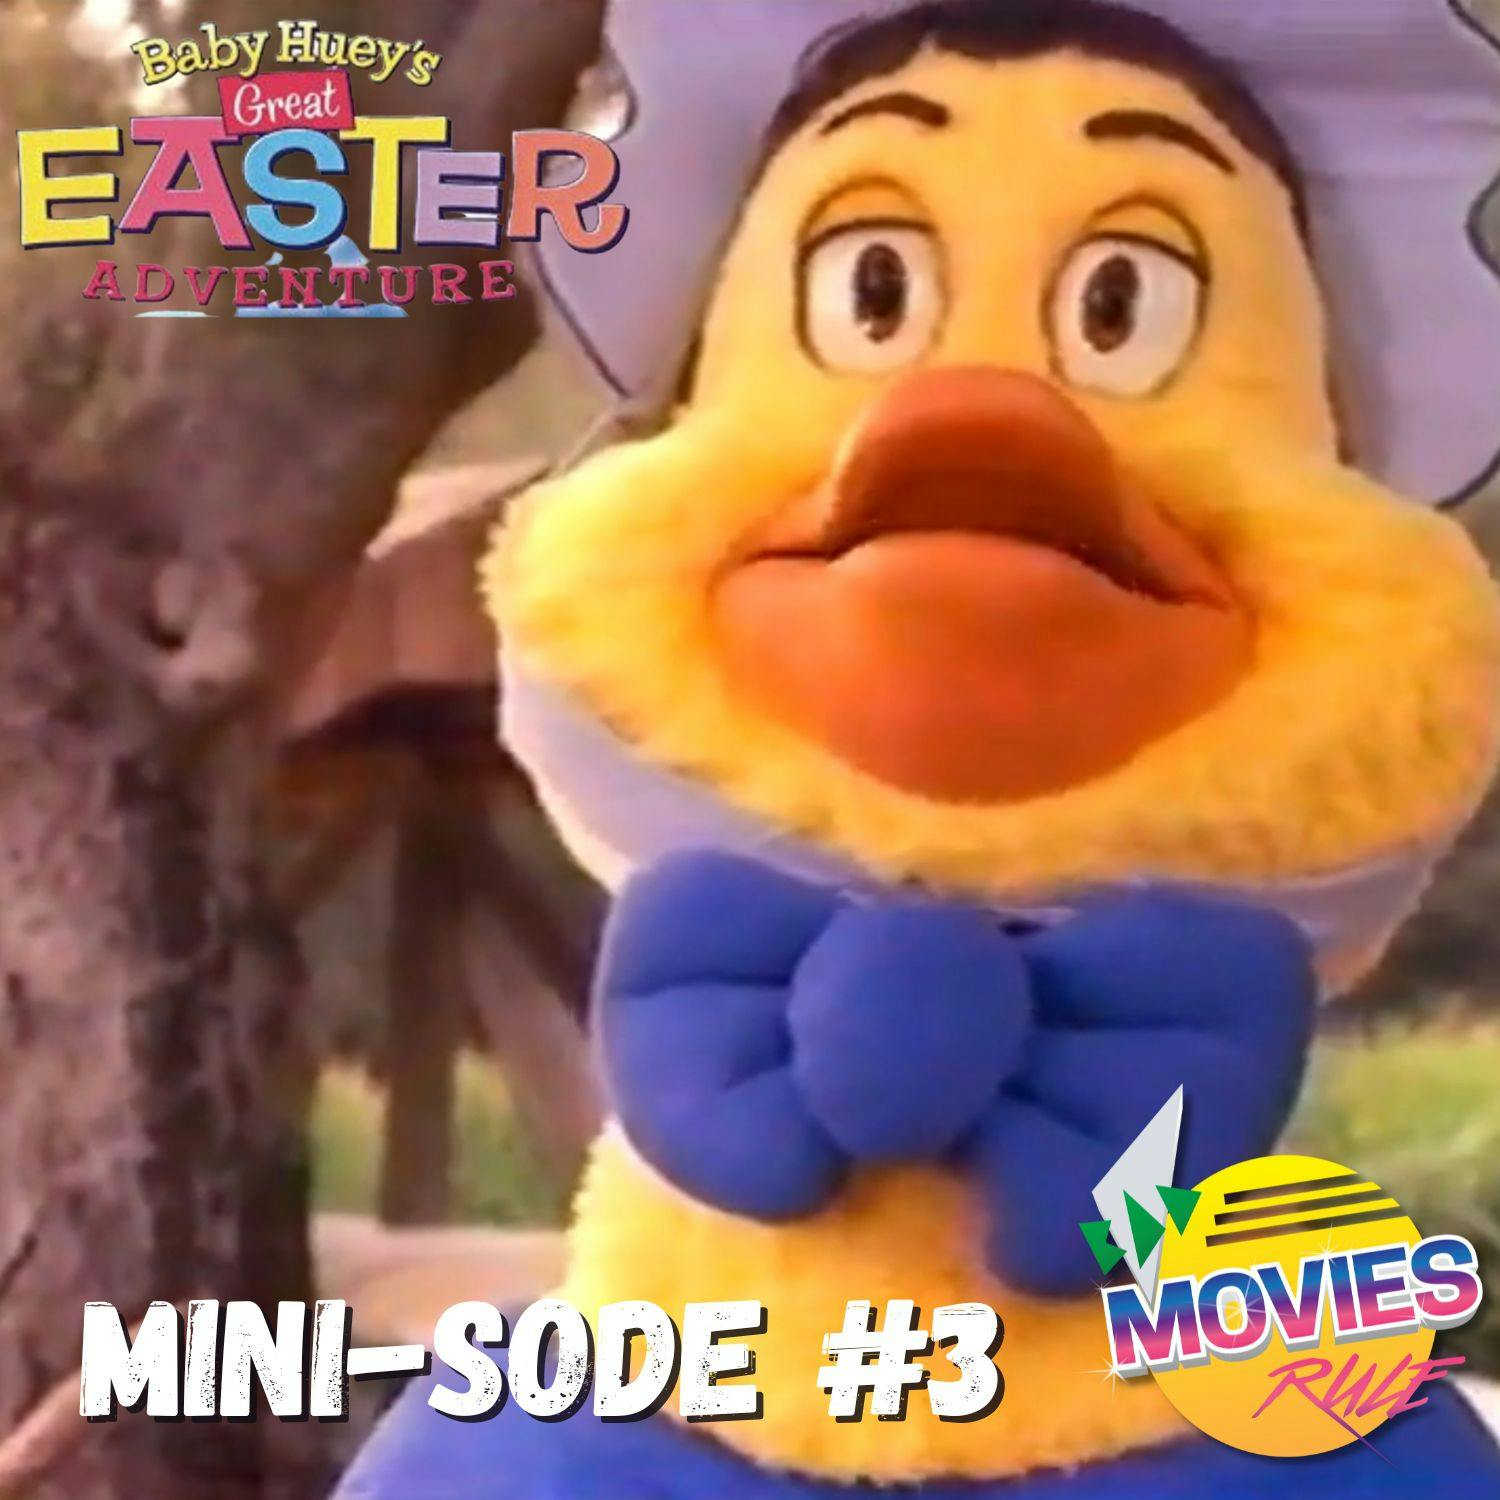 Mini-sode #3: Baby Huey's Great Easter Adventure (1999)